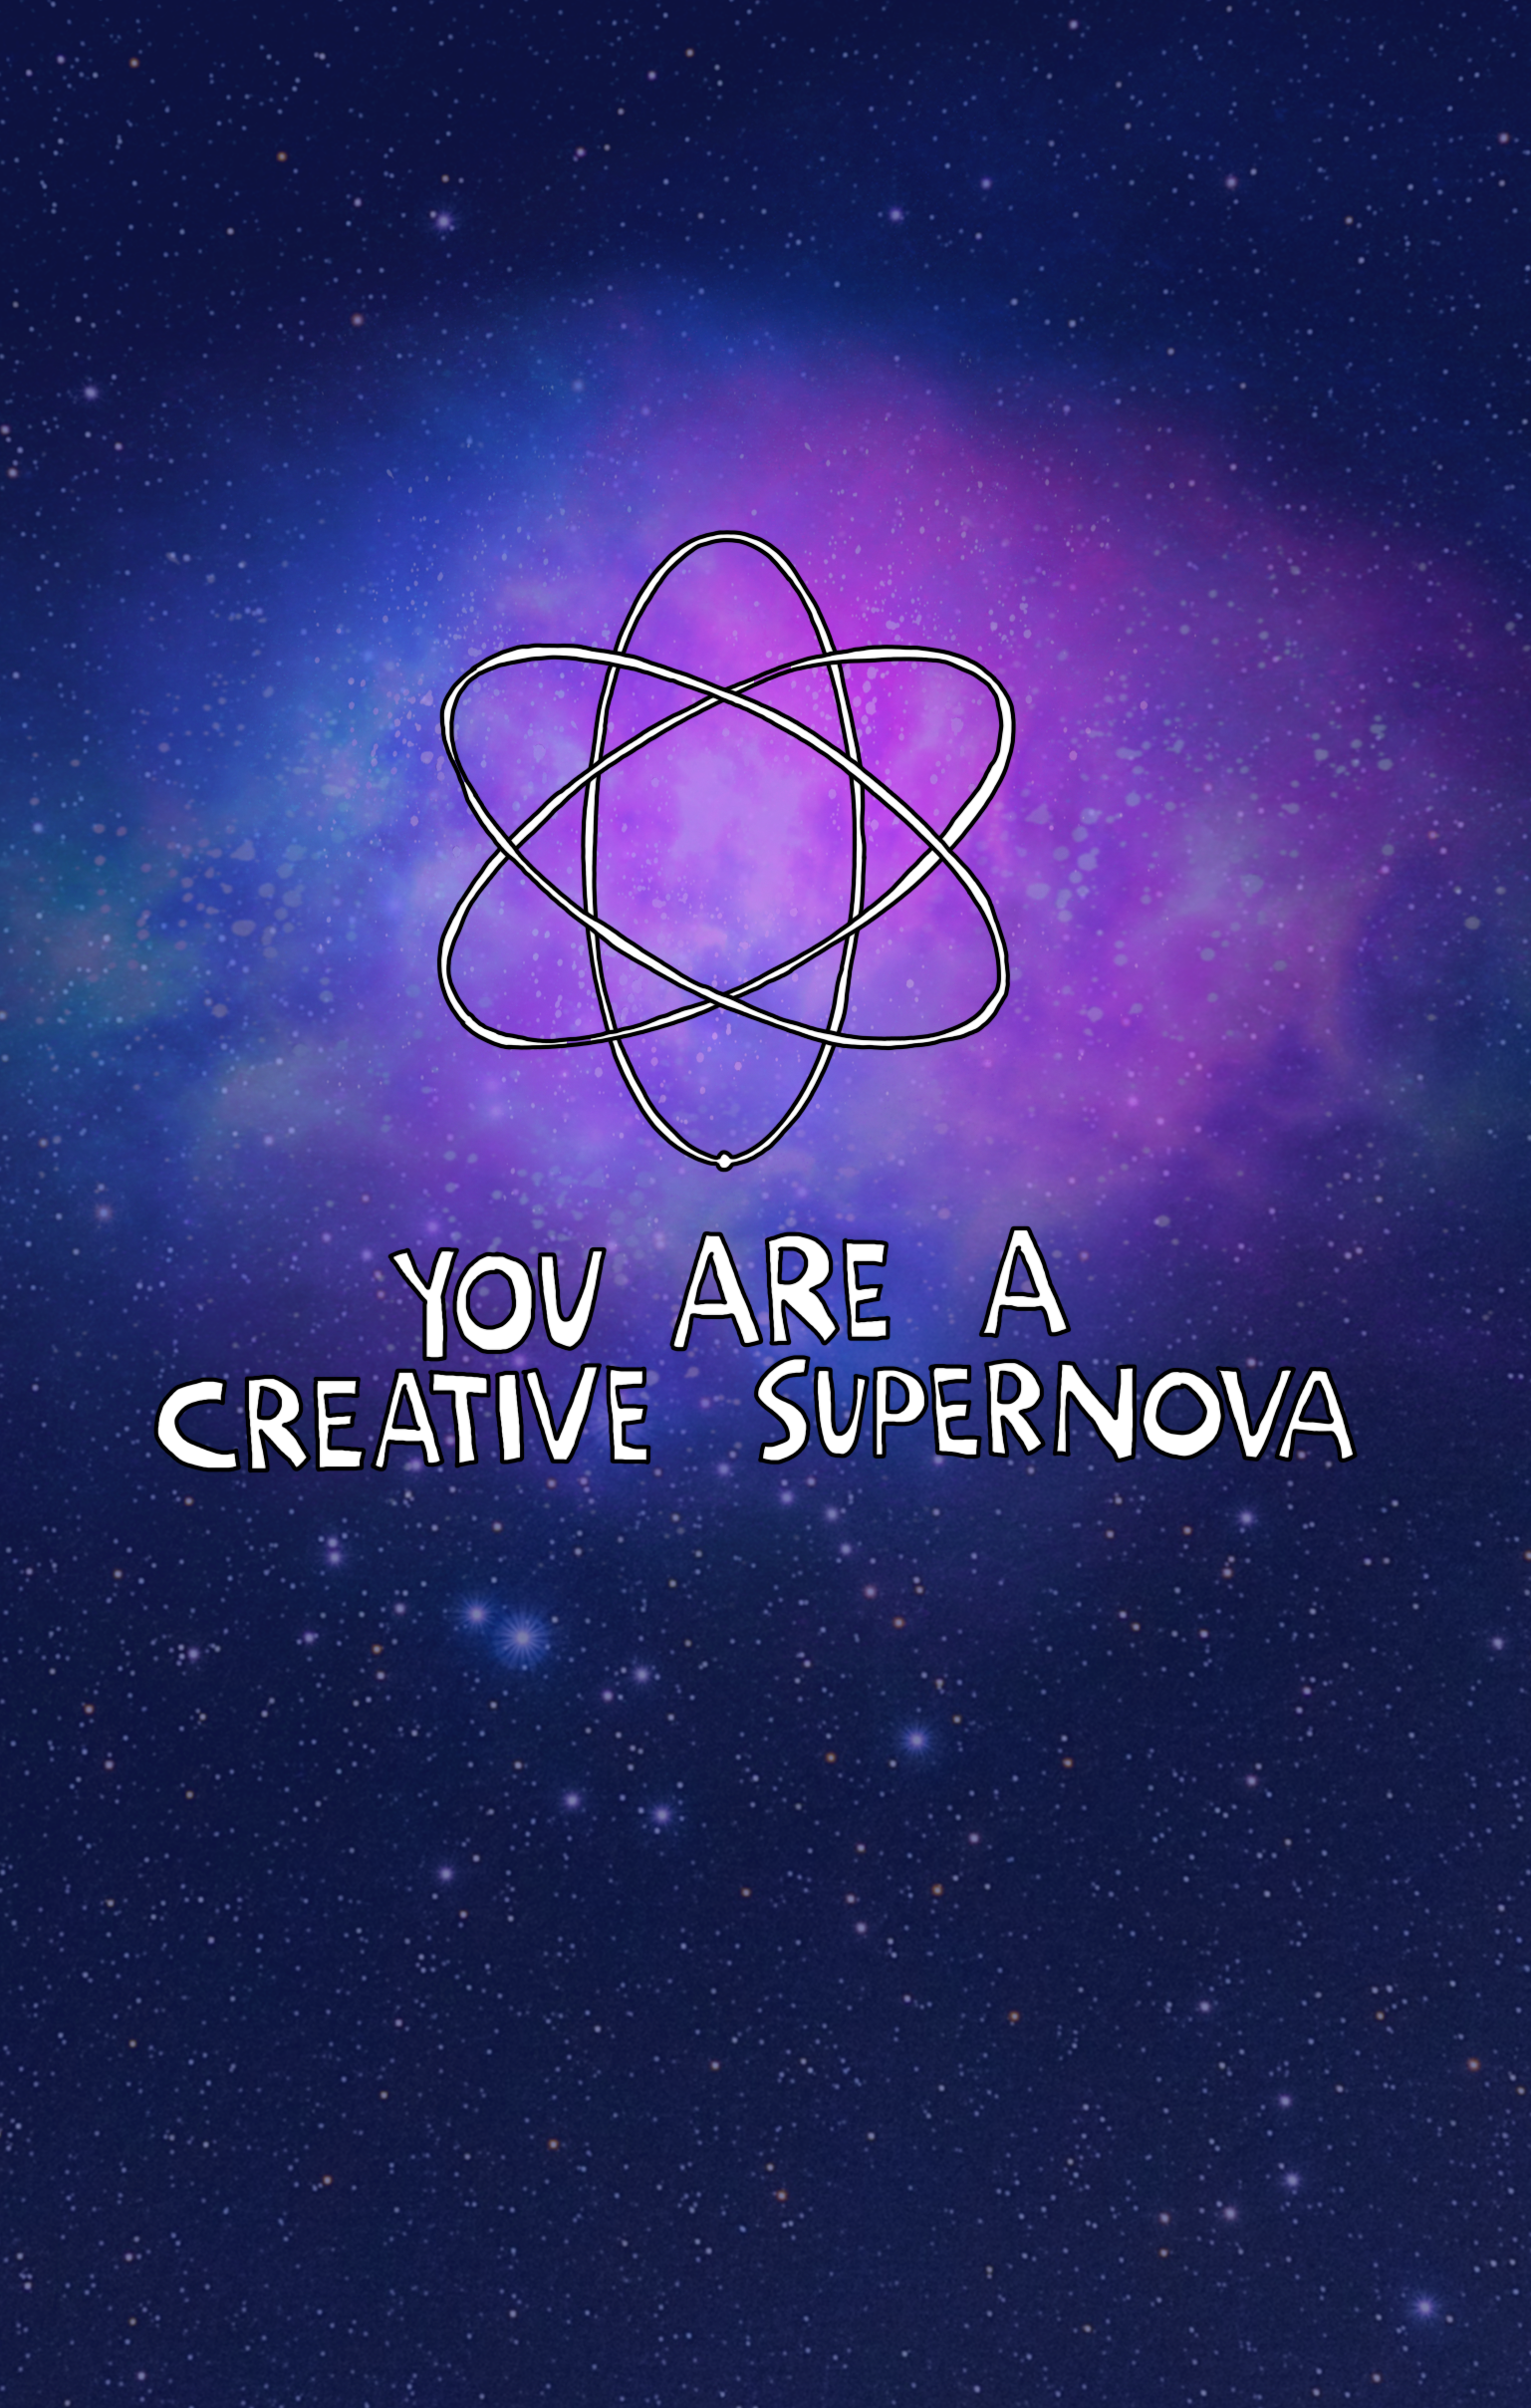 You are a creative supernova